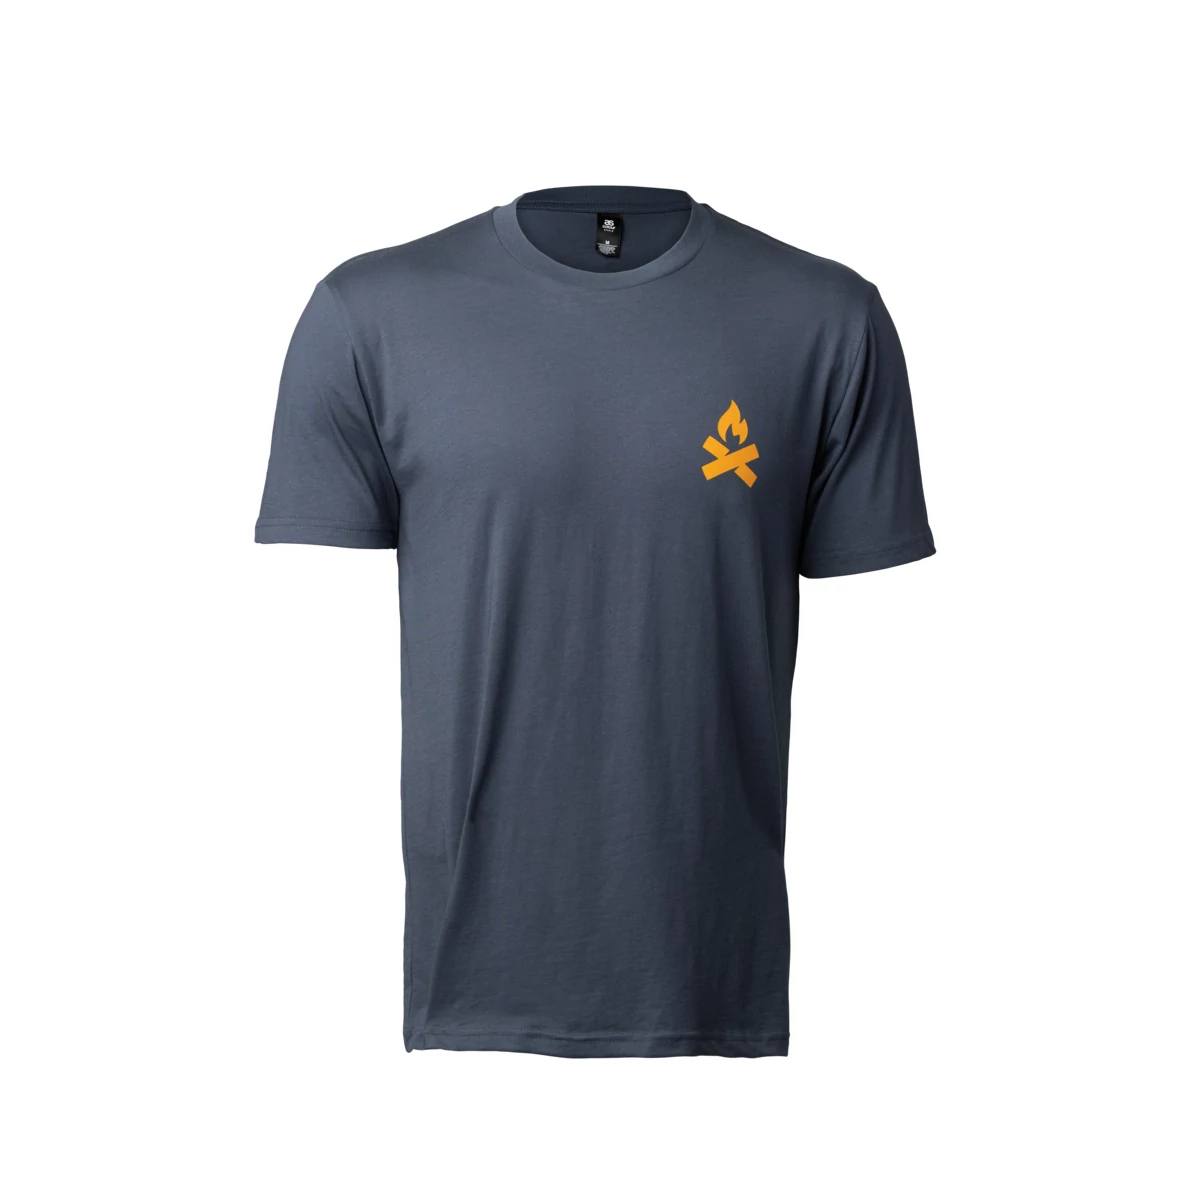 Camp Chef Blue Campsite T-Shirt - XL